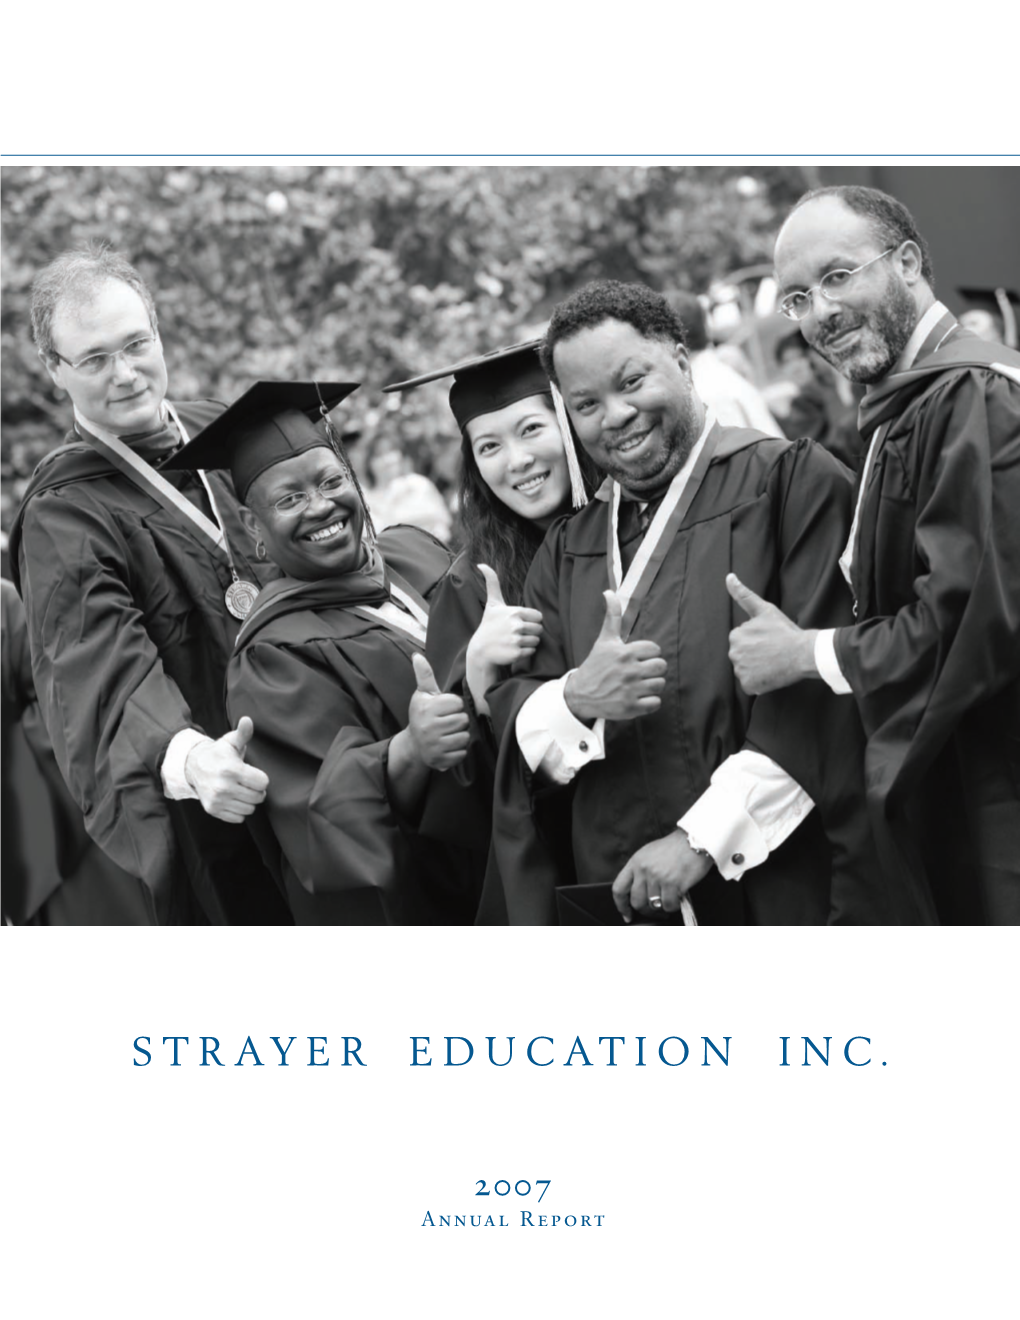 Strayer Education Inc. 1100 Wilson Boulevard Suite 2500 Arlington, Virginia 22209 (703) 247-2500